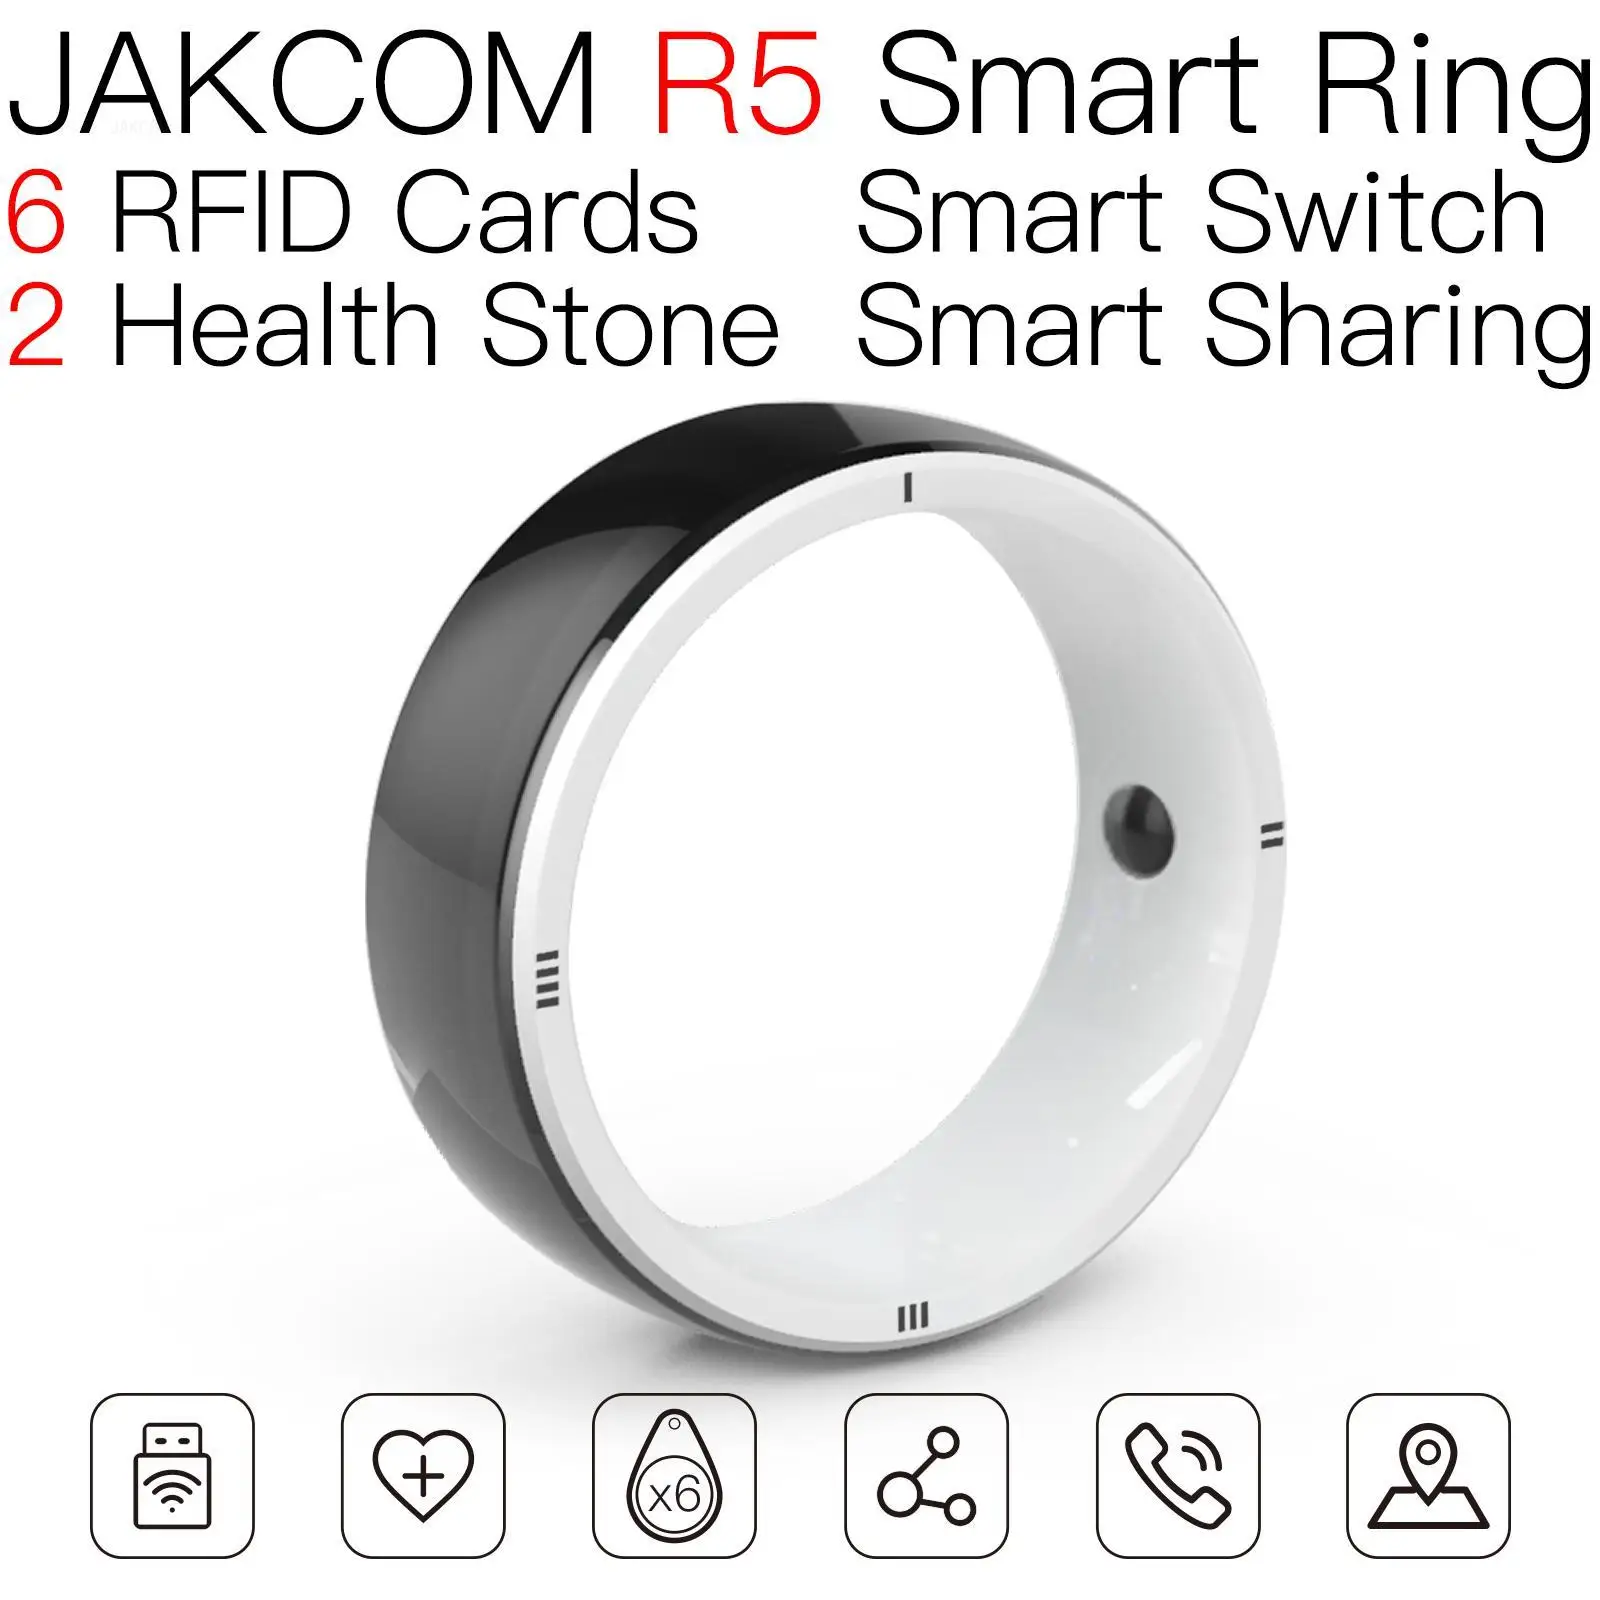 

JAKCOM R5 Smart Ring Newer than t5577 copy business cards fbi id cart iso14443b wirles key video card rfid metal uhf 3mm tag